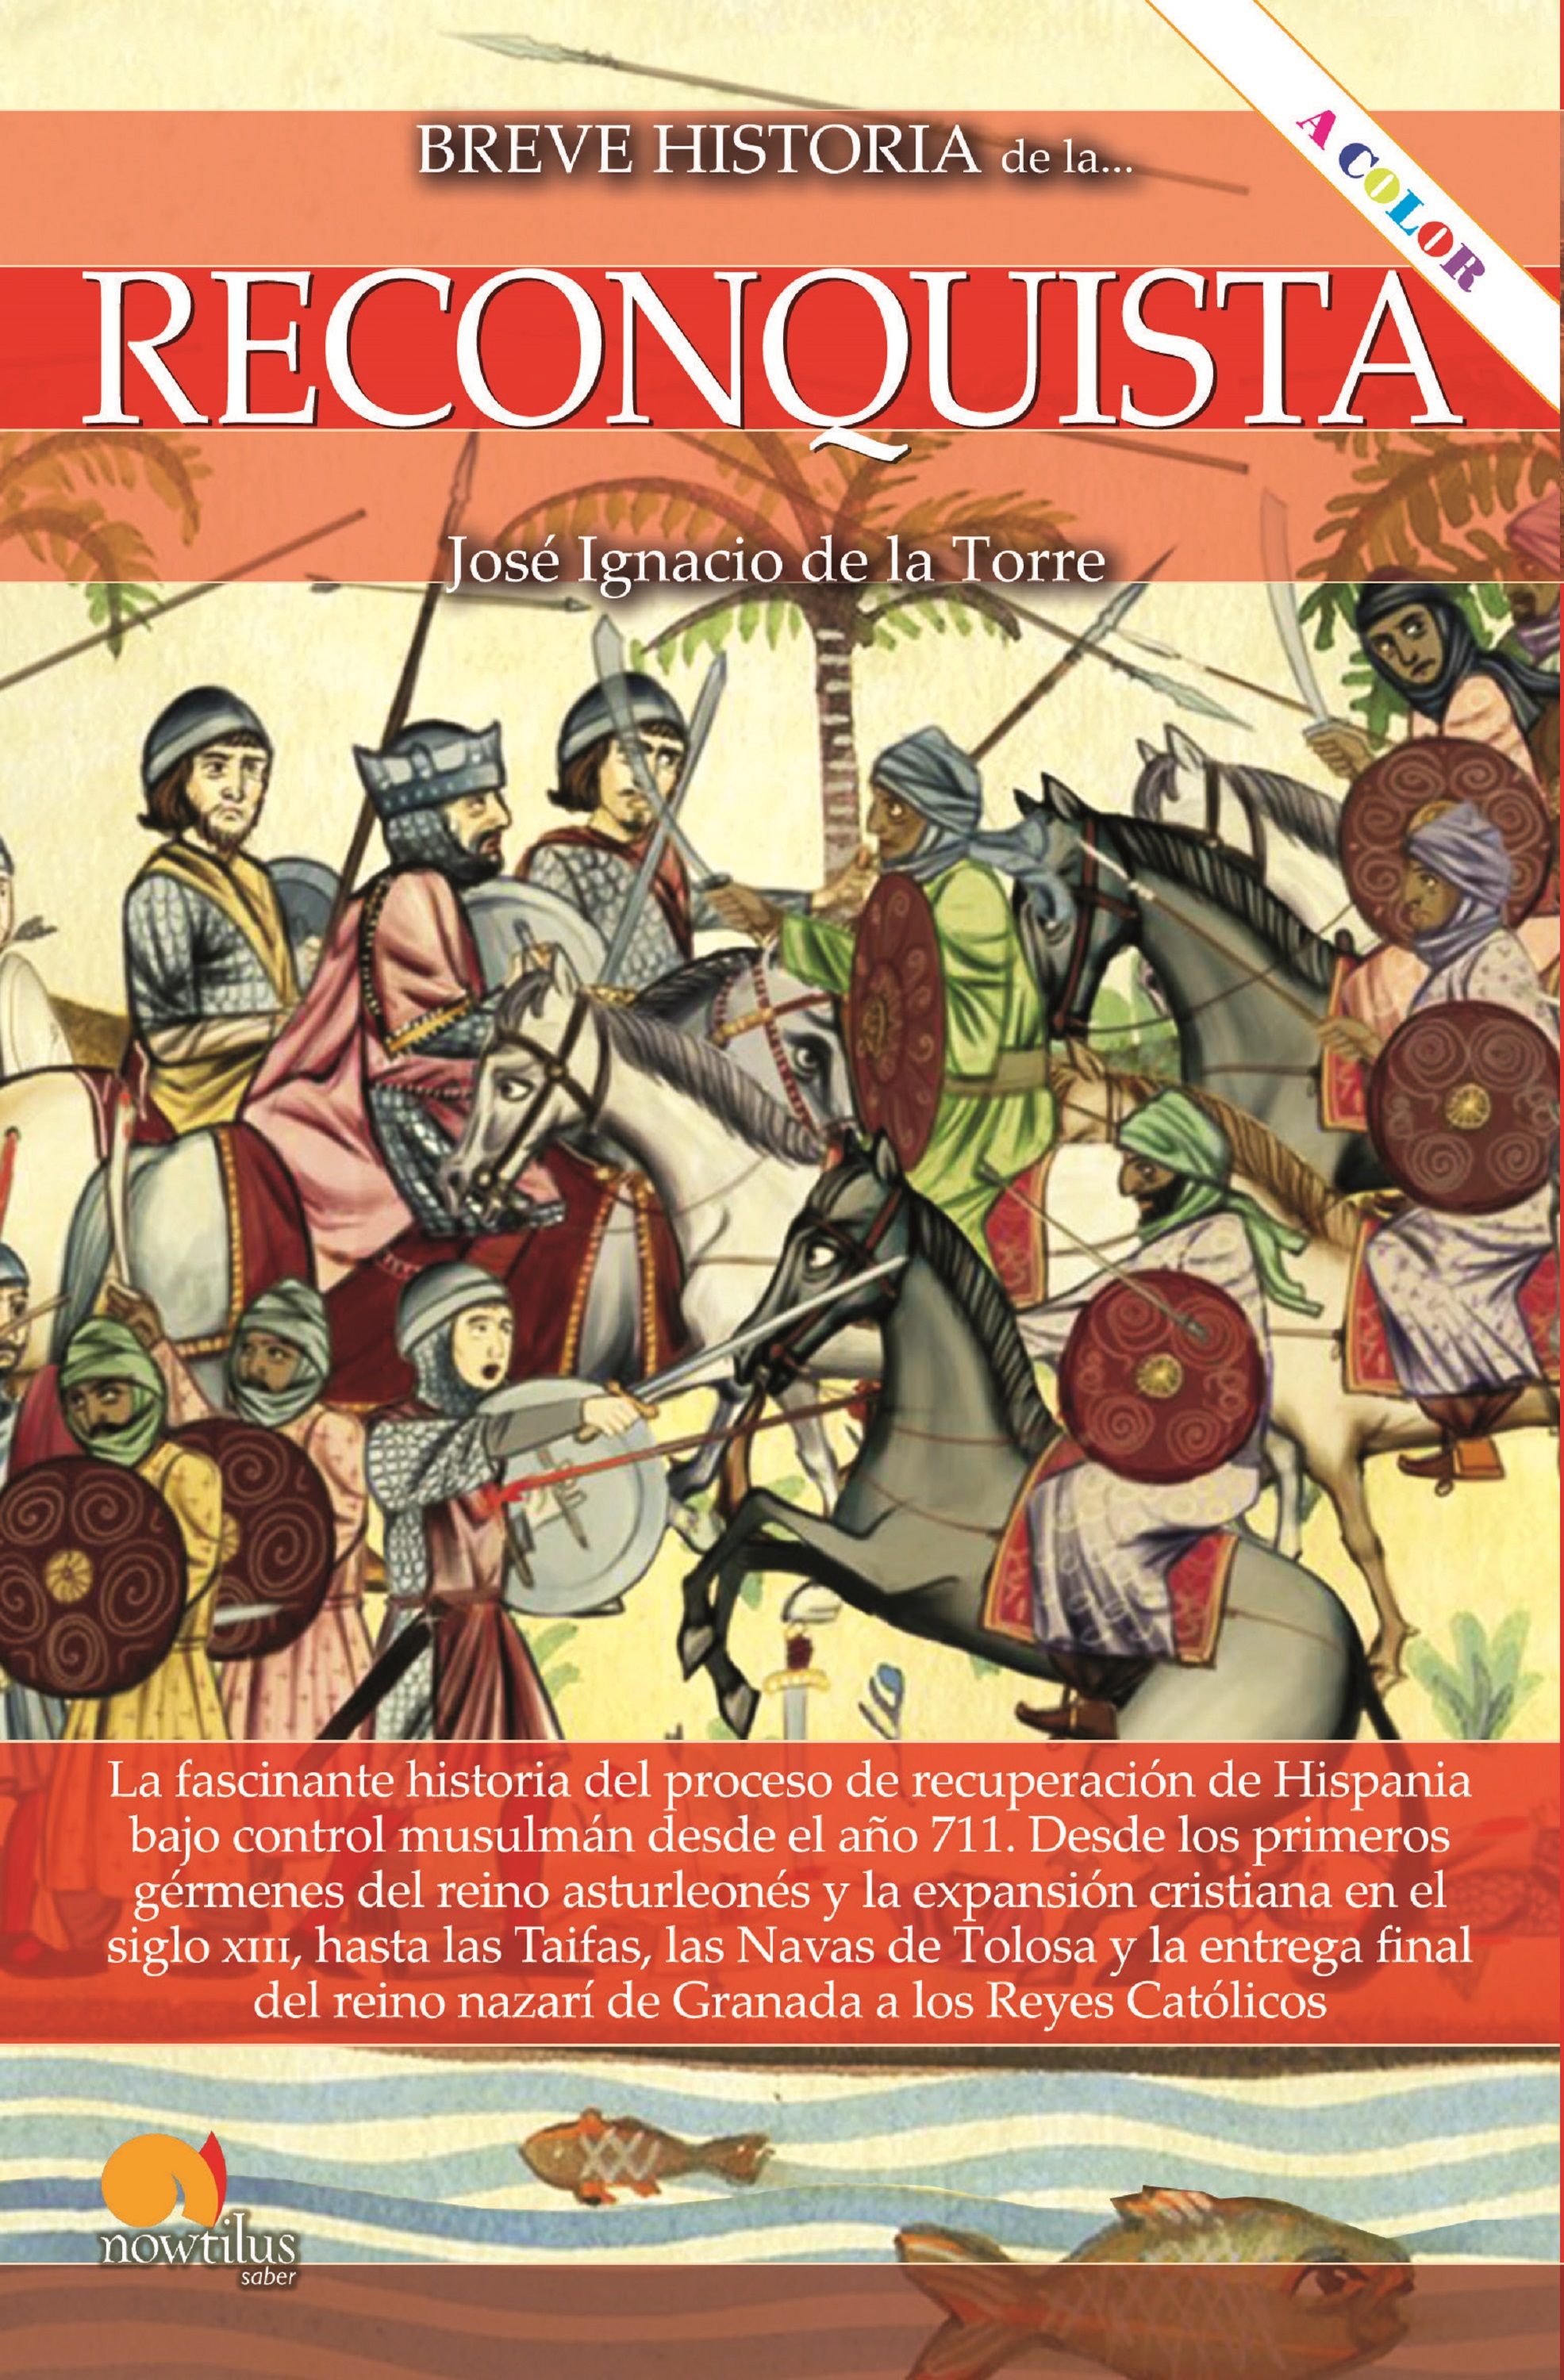 Breve historia de la Reconquista n. e. Color